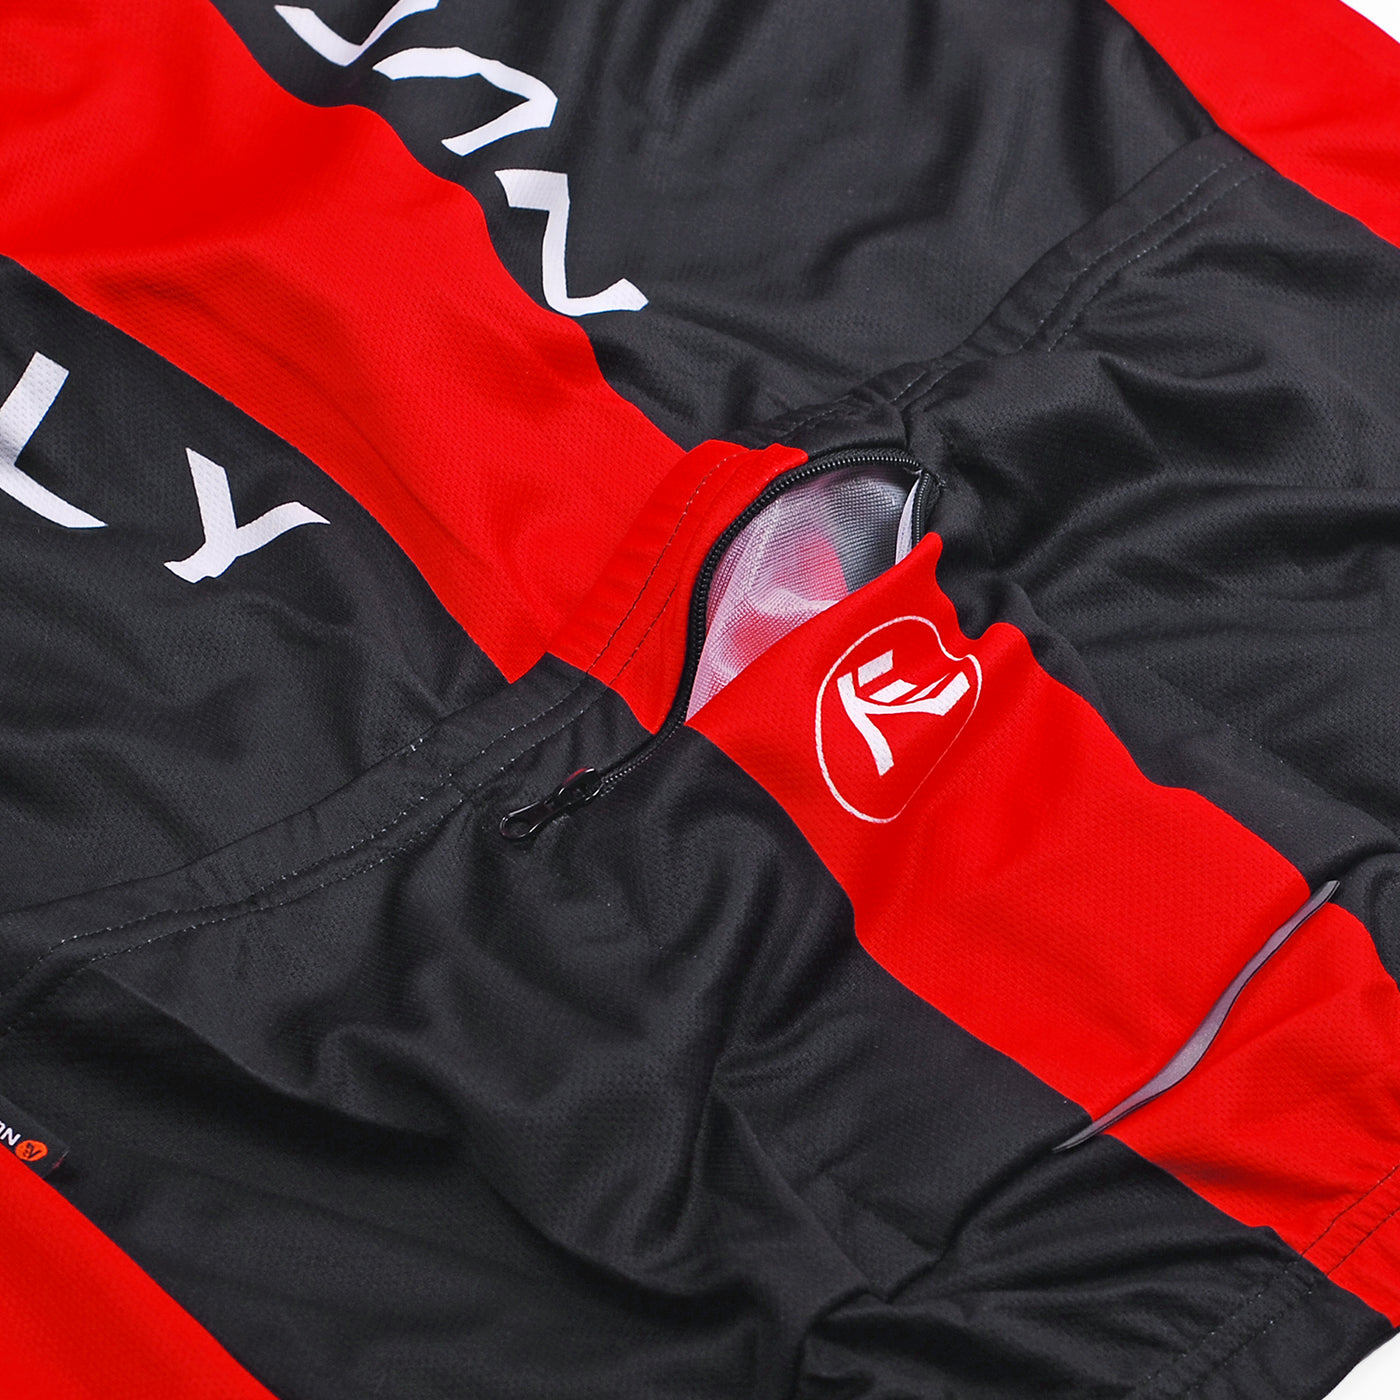 Nuckily CJ133 Mens Cycling Jersey (Red/Black)